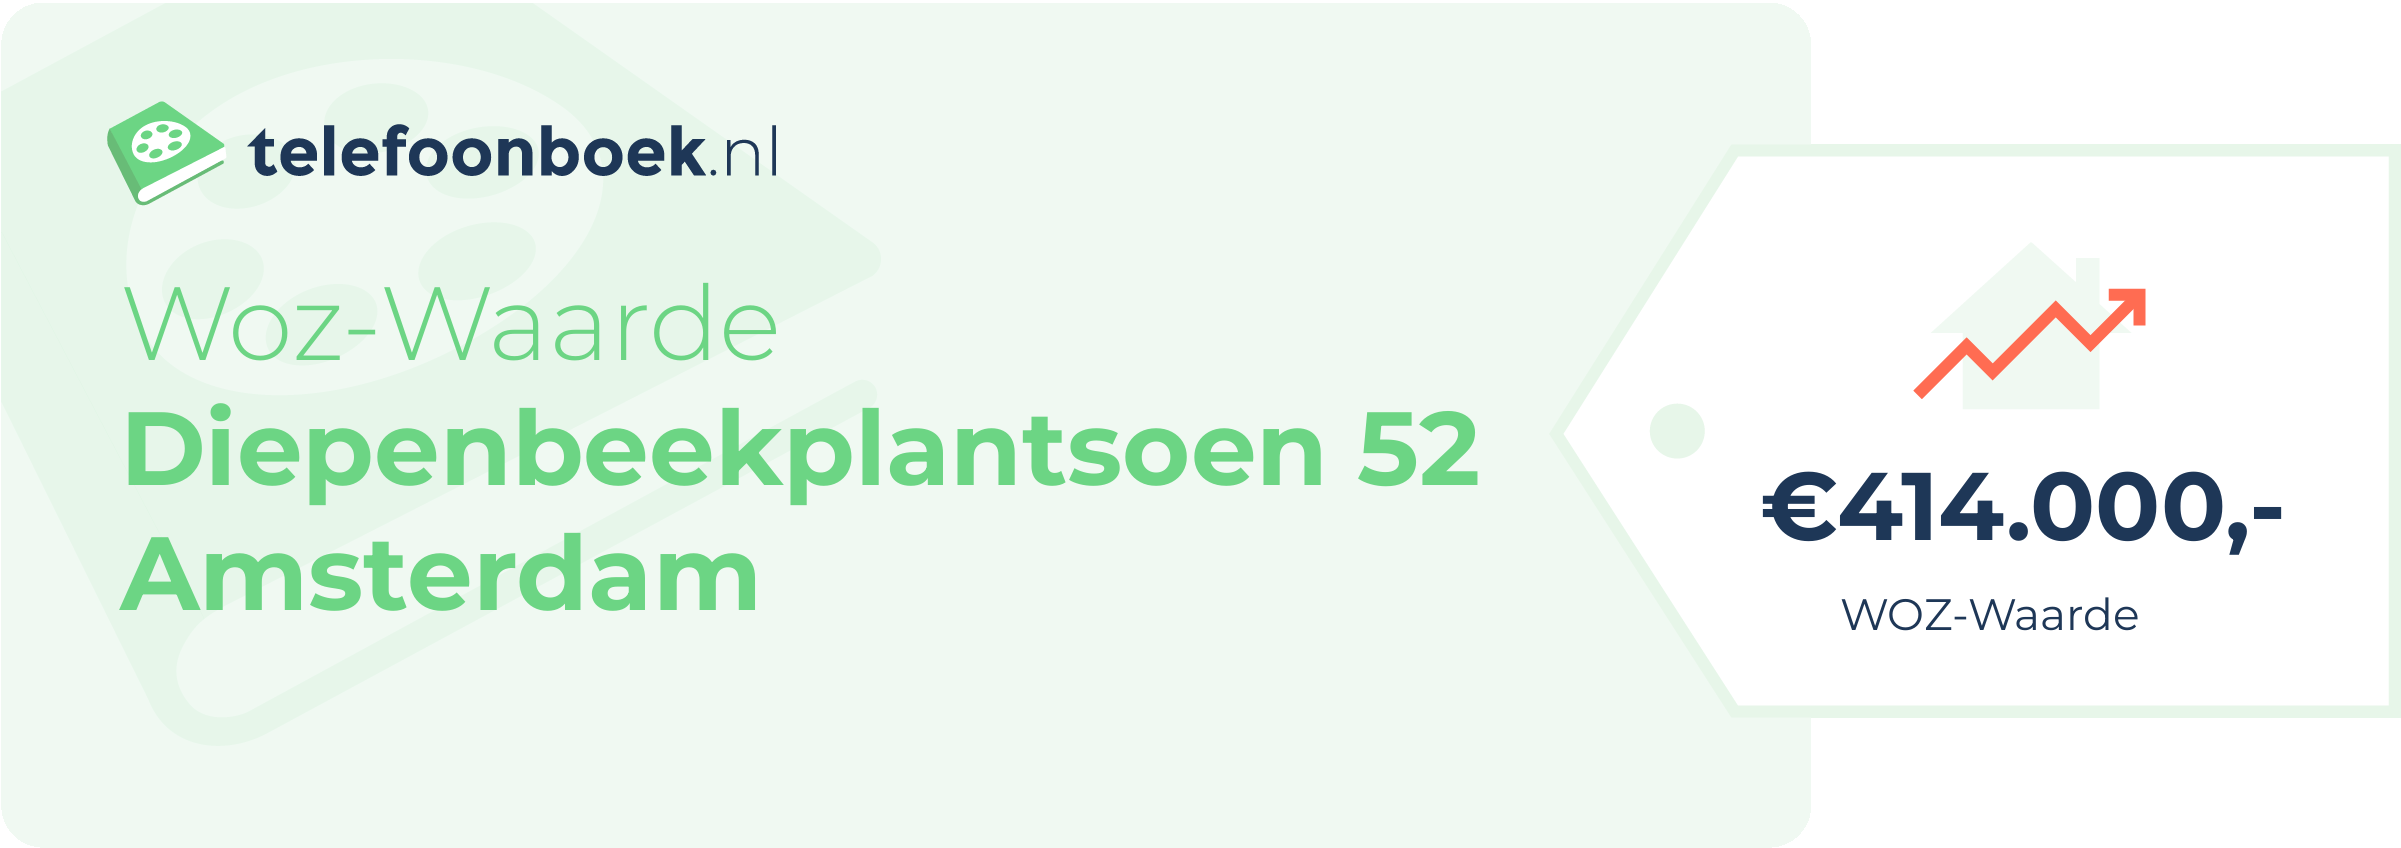 WOZ-waarde Diepenbeekplantsoen 52 Amsterdam